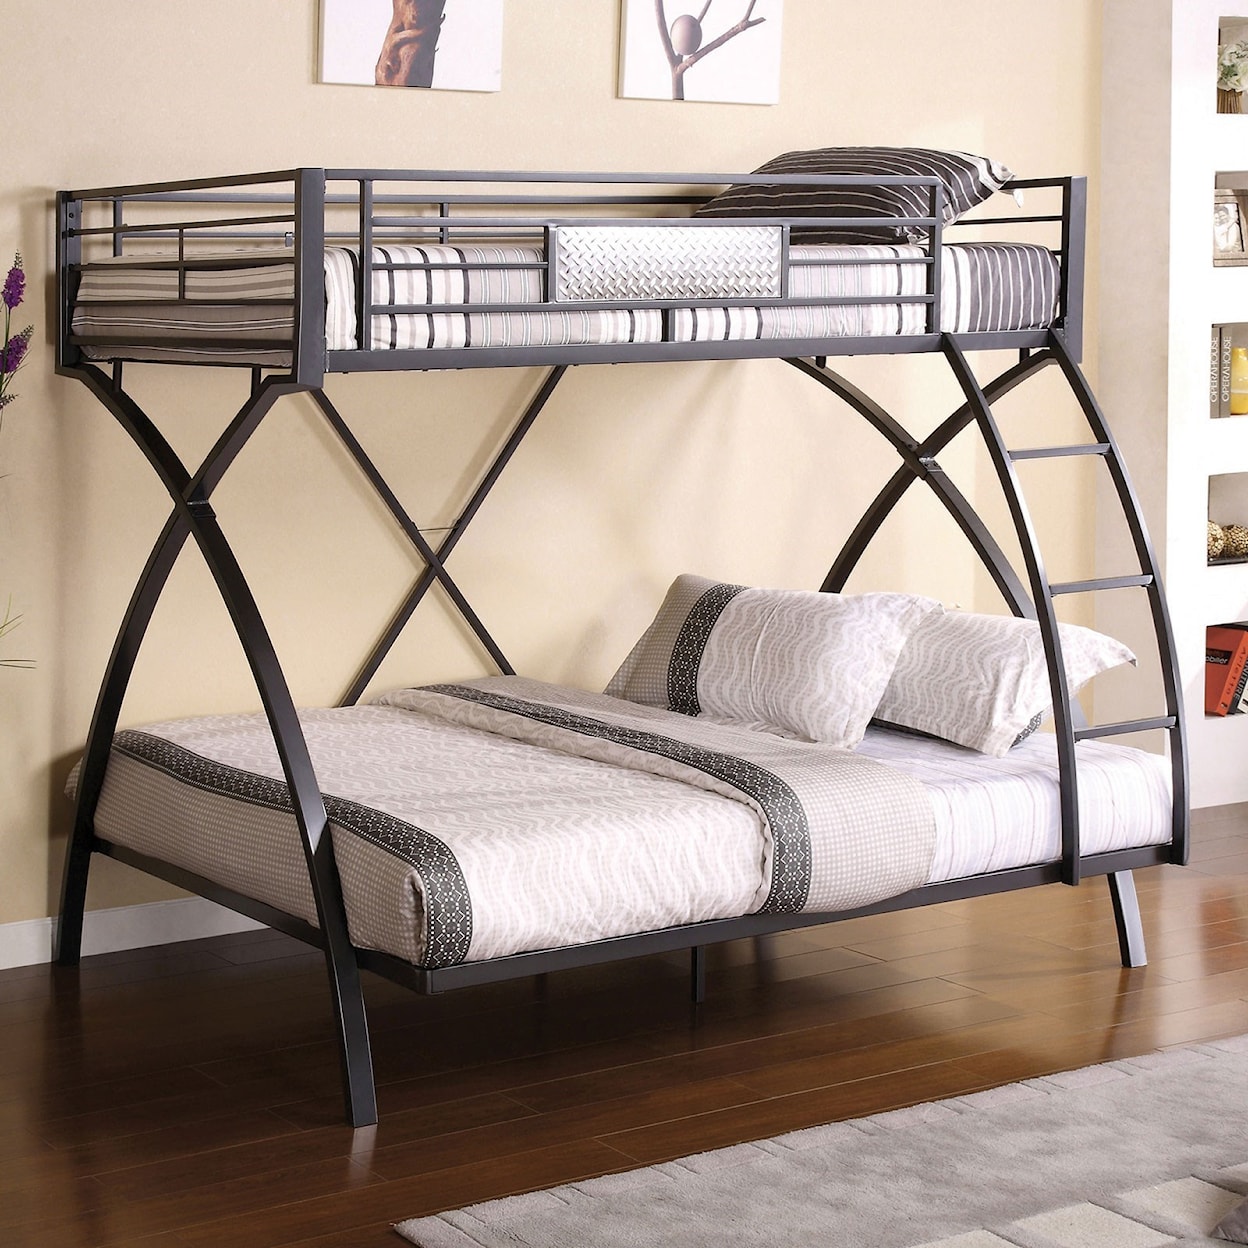 Furniture of America Apollo Twin/Full Bunk Bed